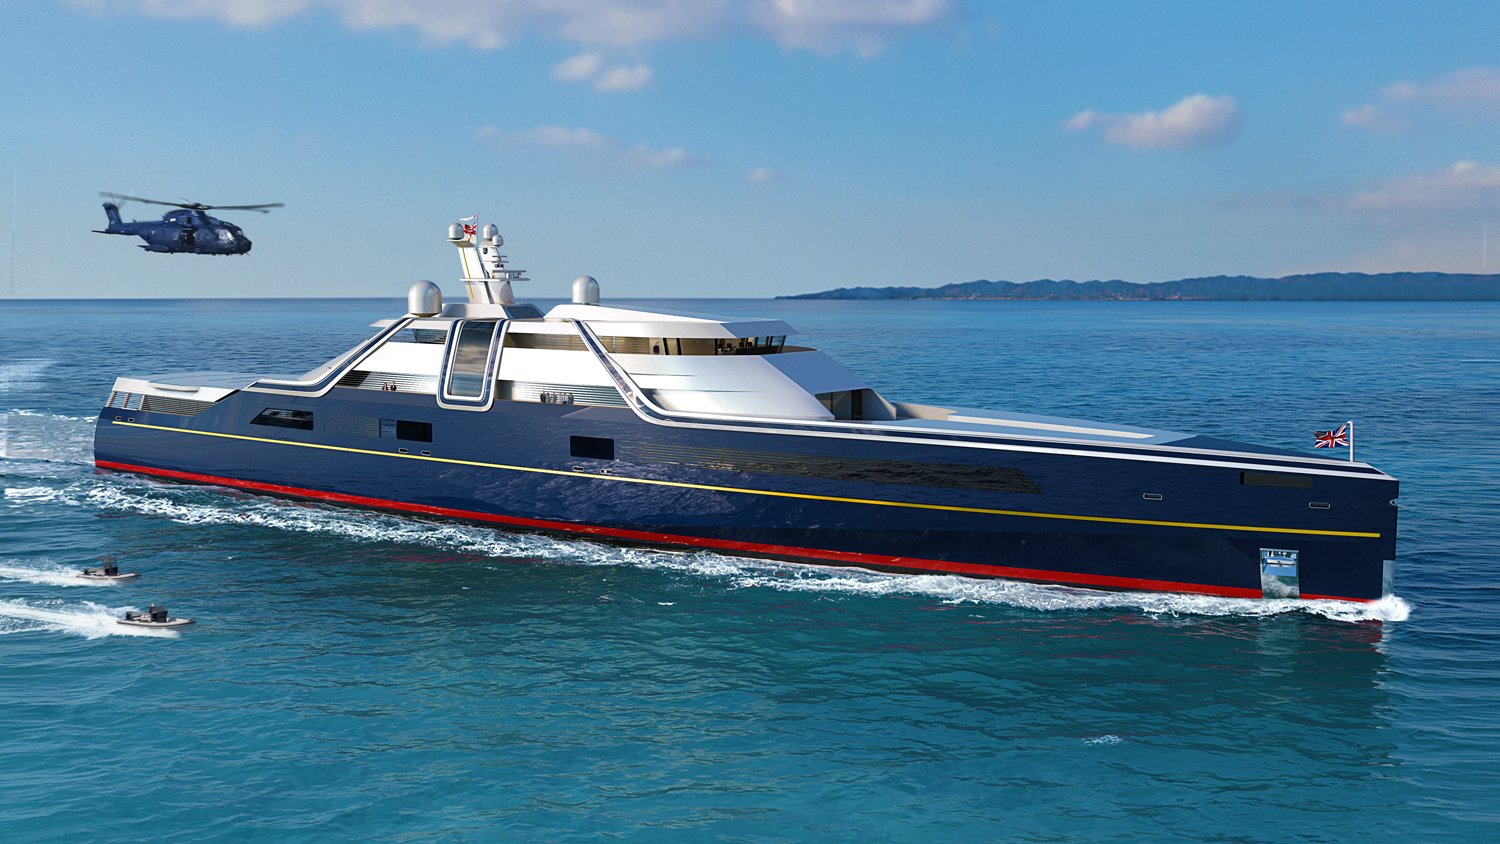 royal yacht plans revealed